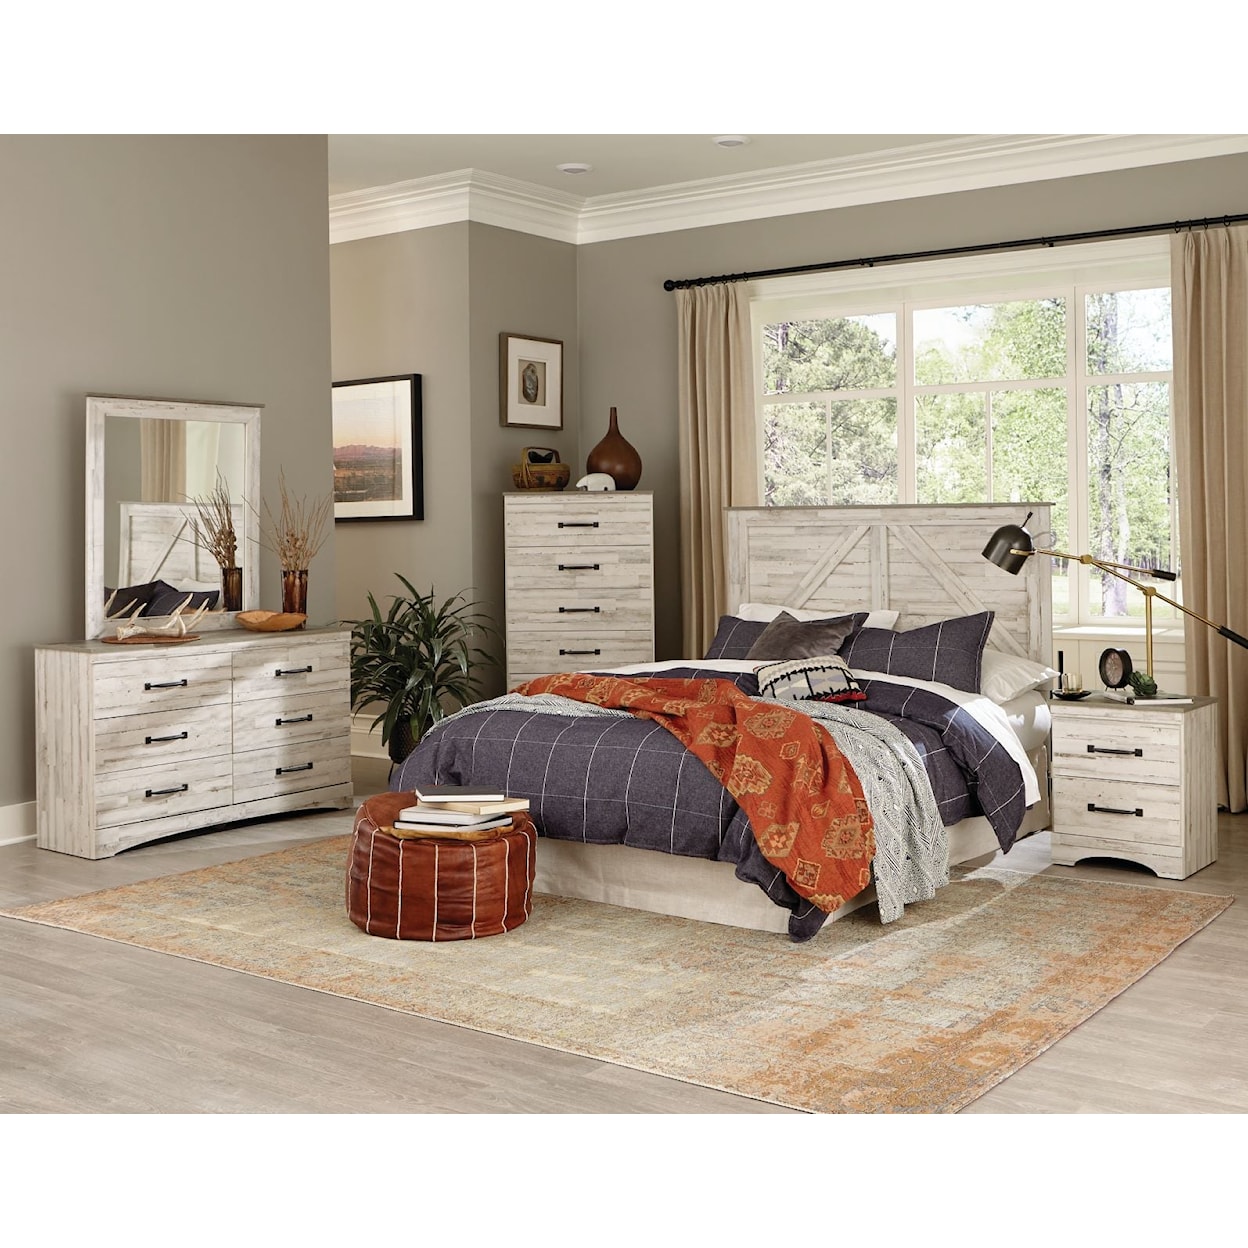 Kith Furniture Aspen Aspen Queen Bedroom Set